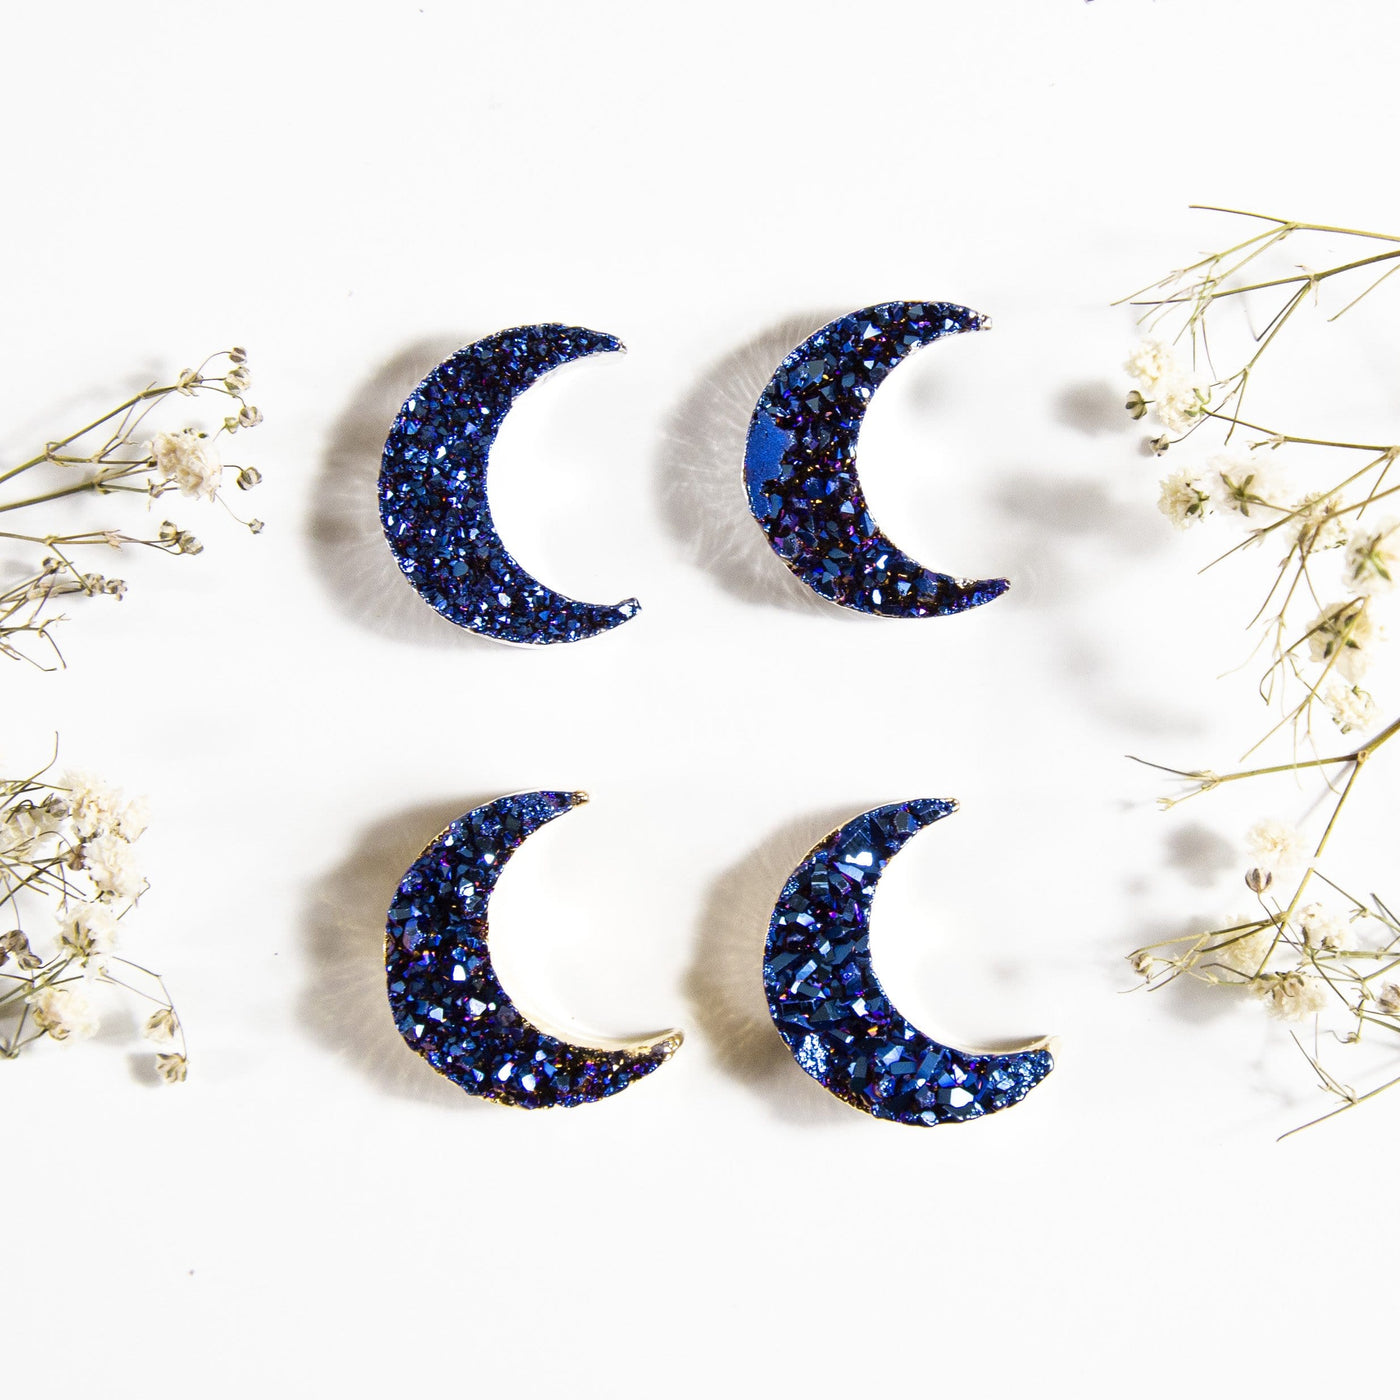 4 amethyst moons with blue titanium coating on white background